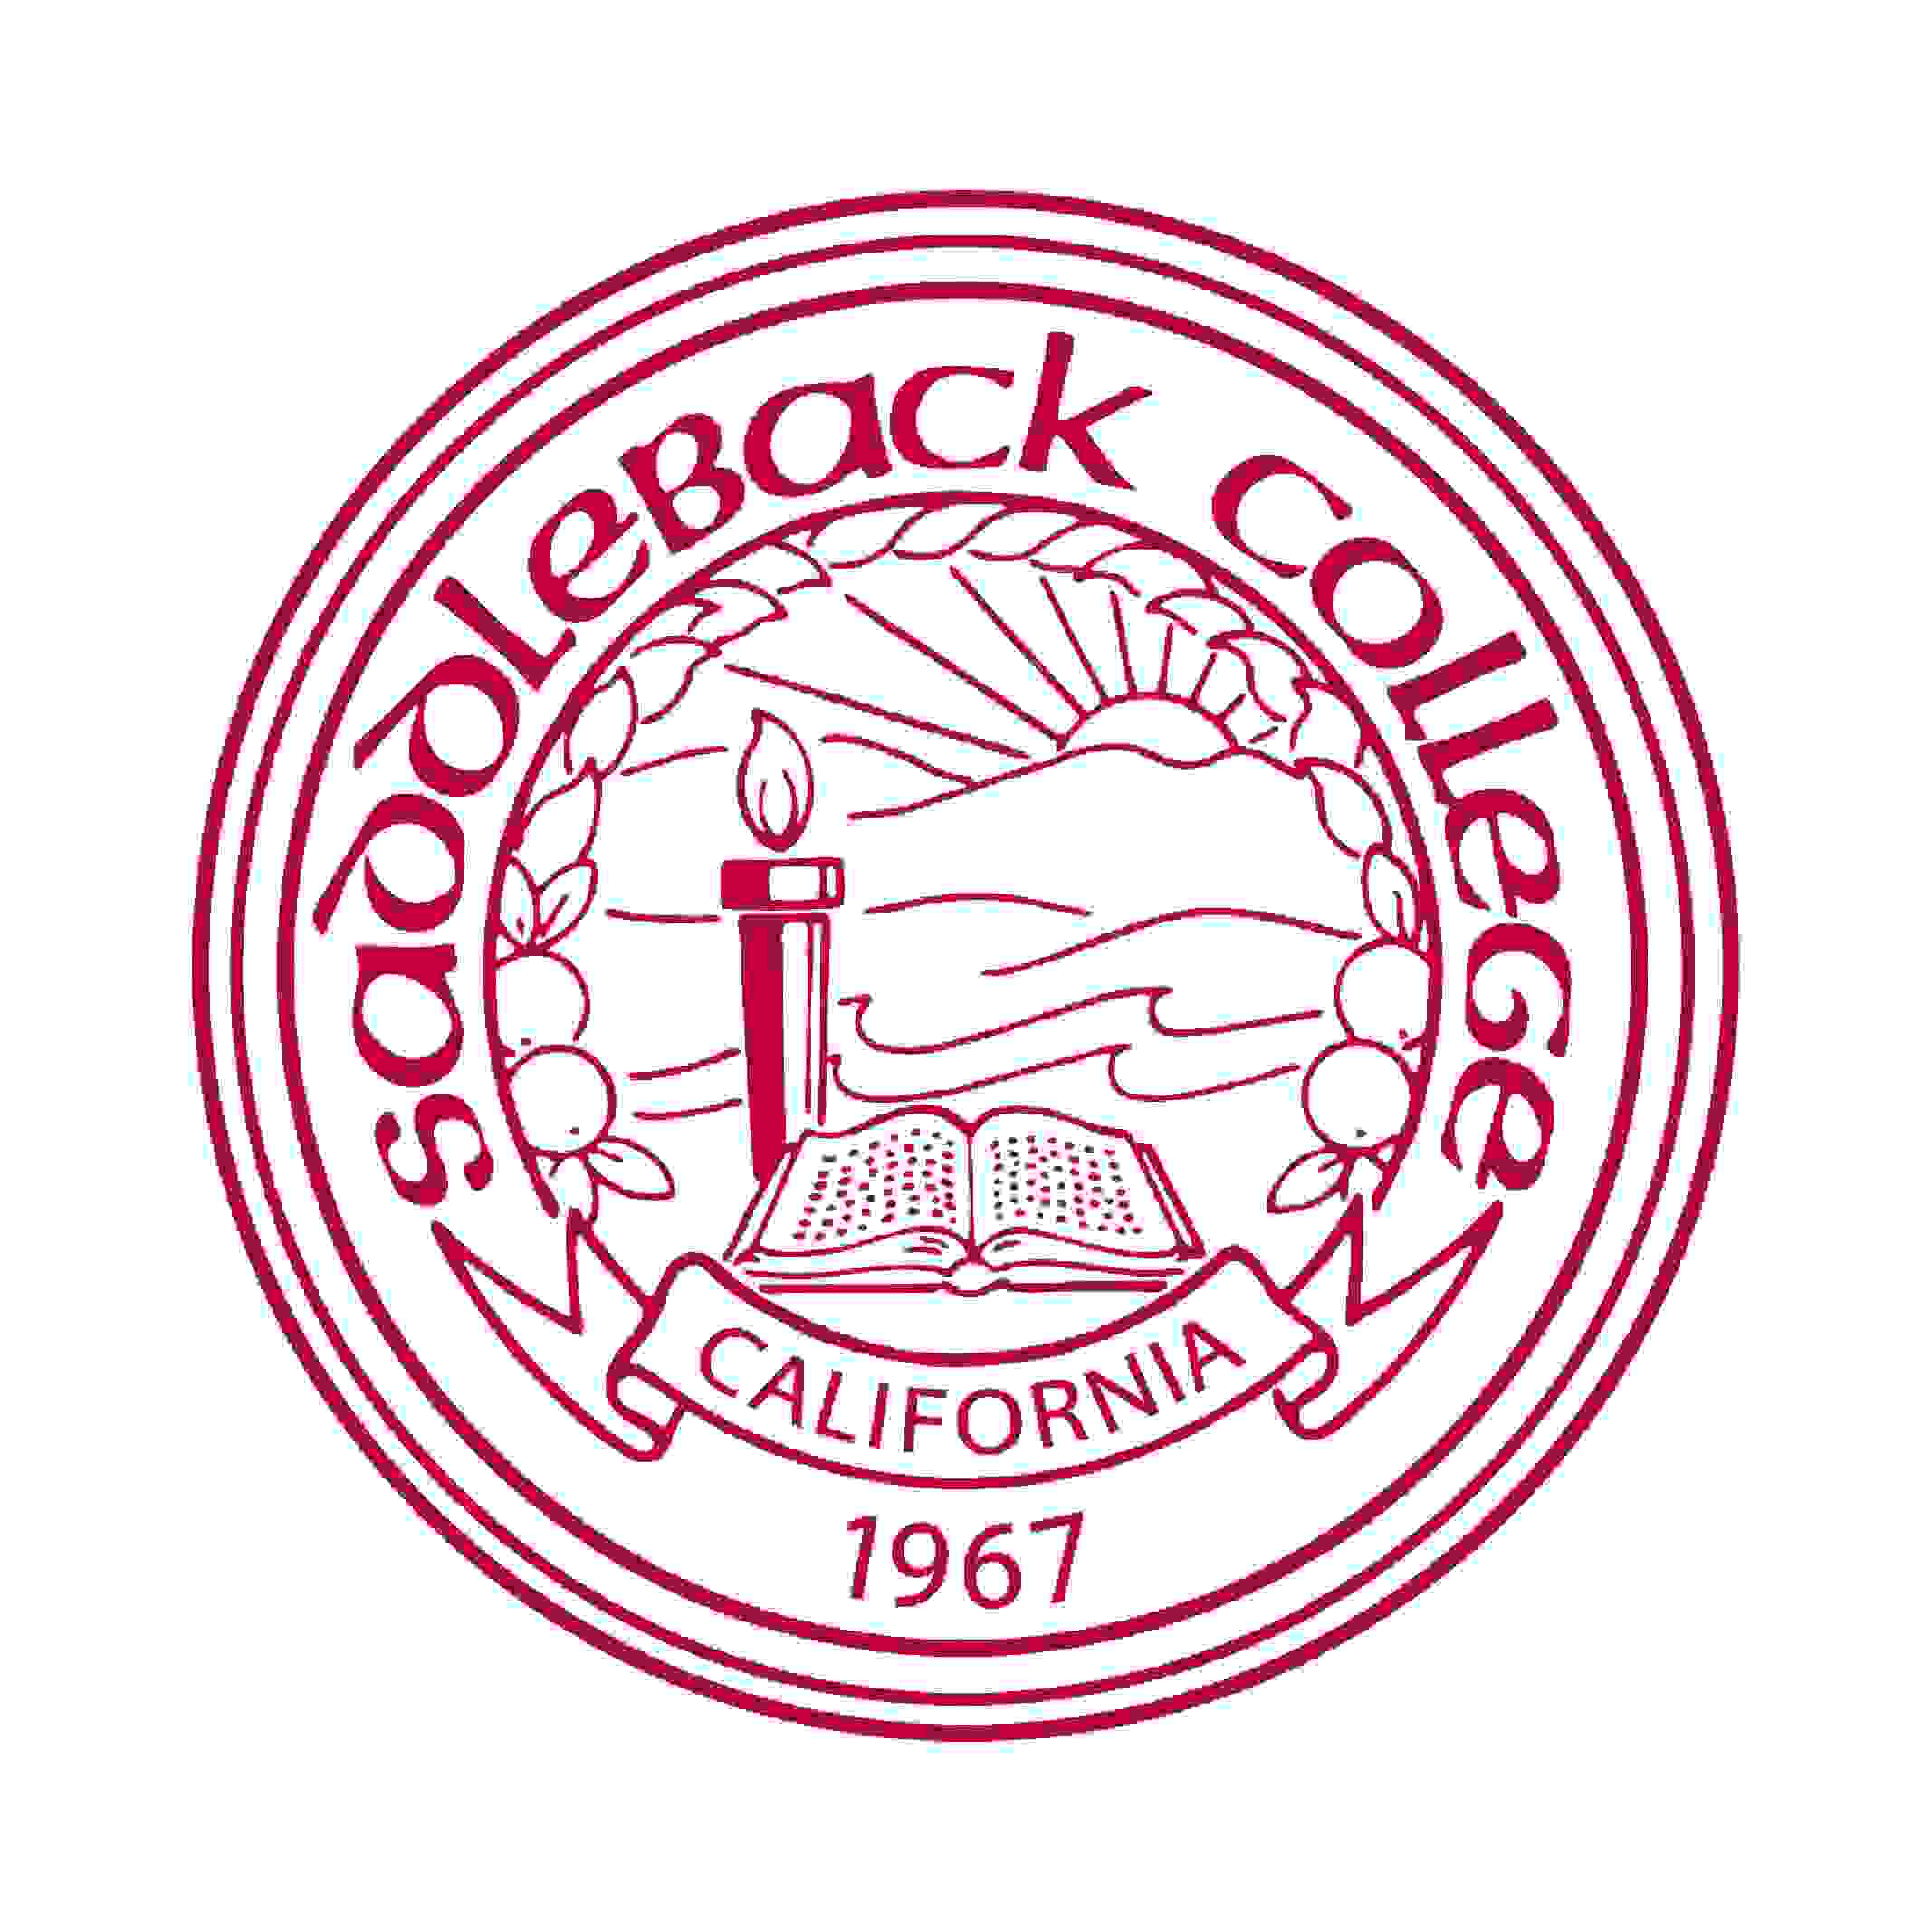 Class Schedule  Saddleback College